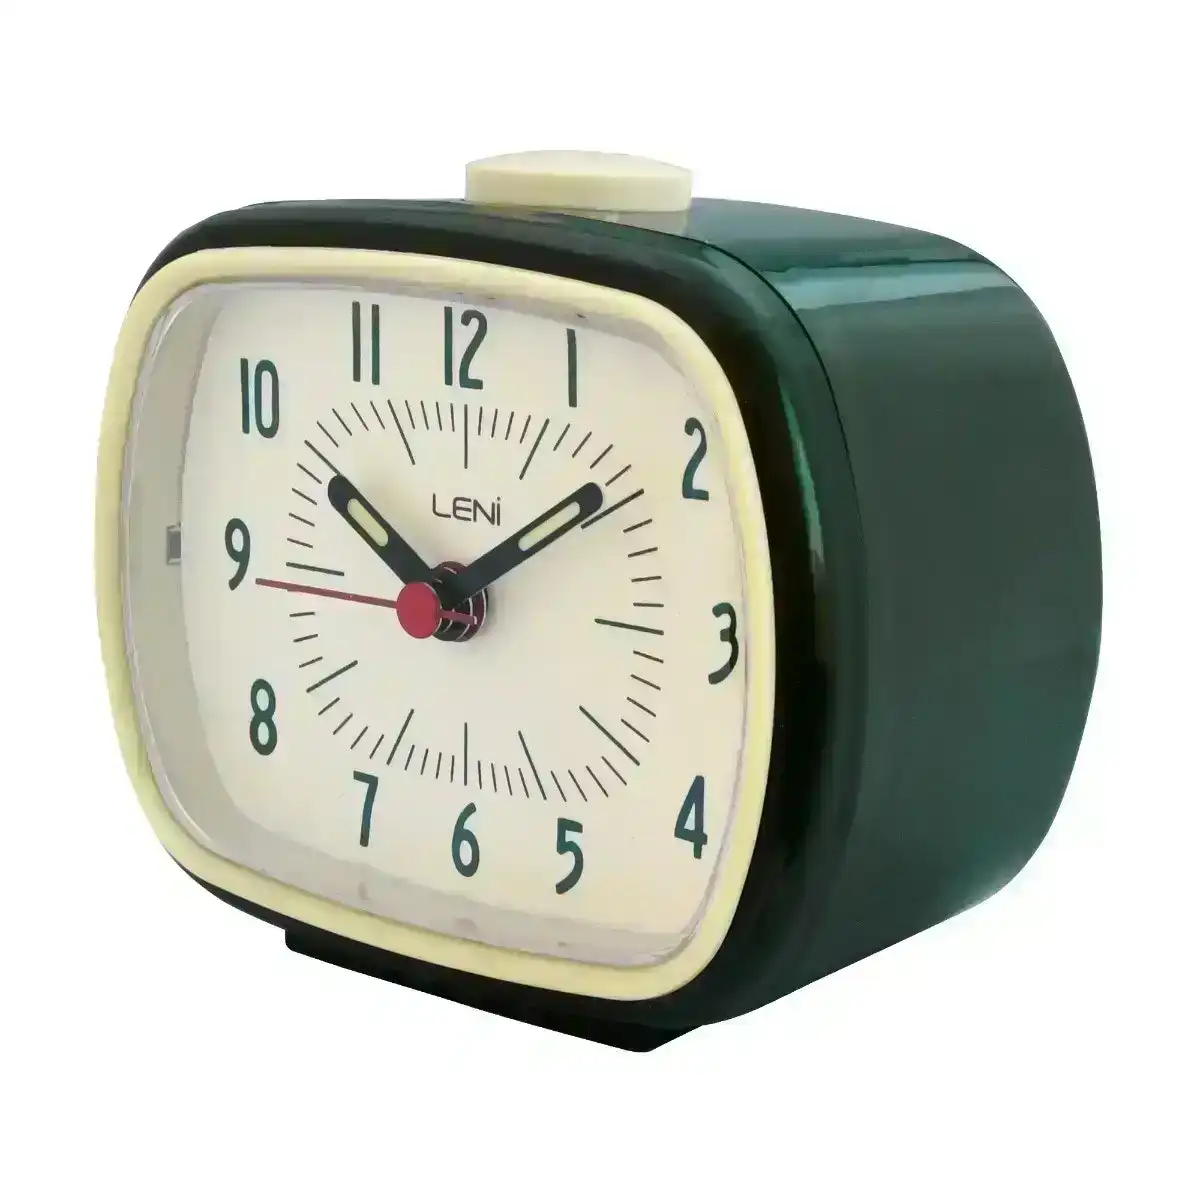 Leni Retro Analogue Alarm Clock Glow in the Dark Home/Room Decor Olive Green